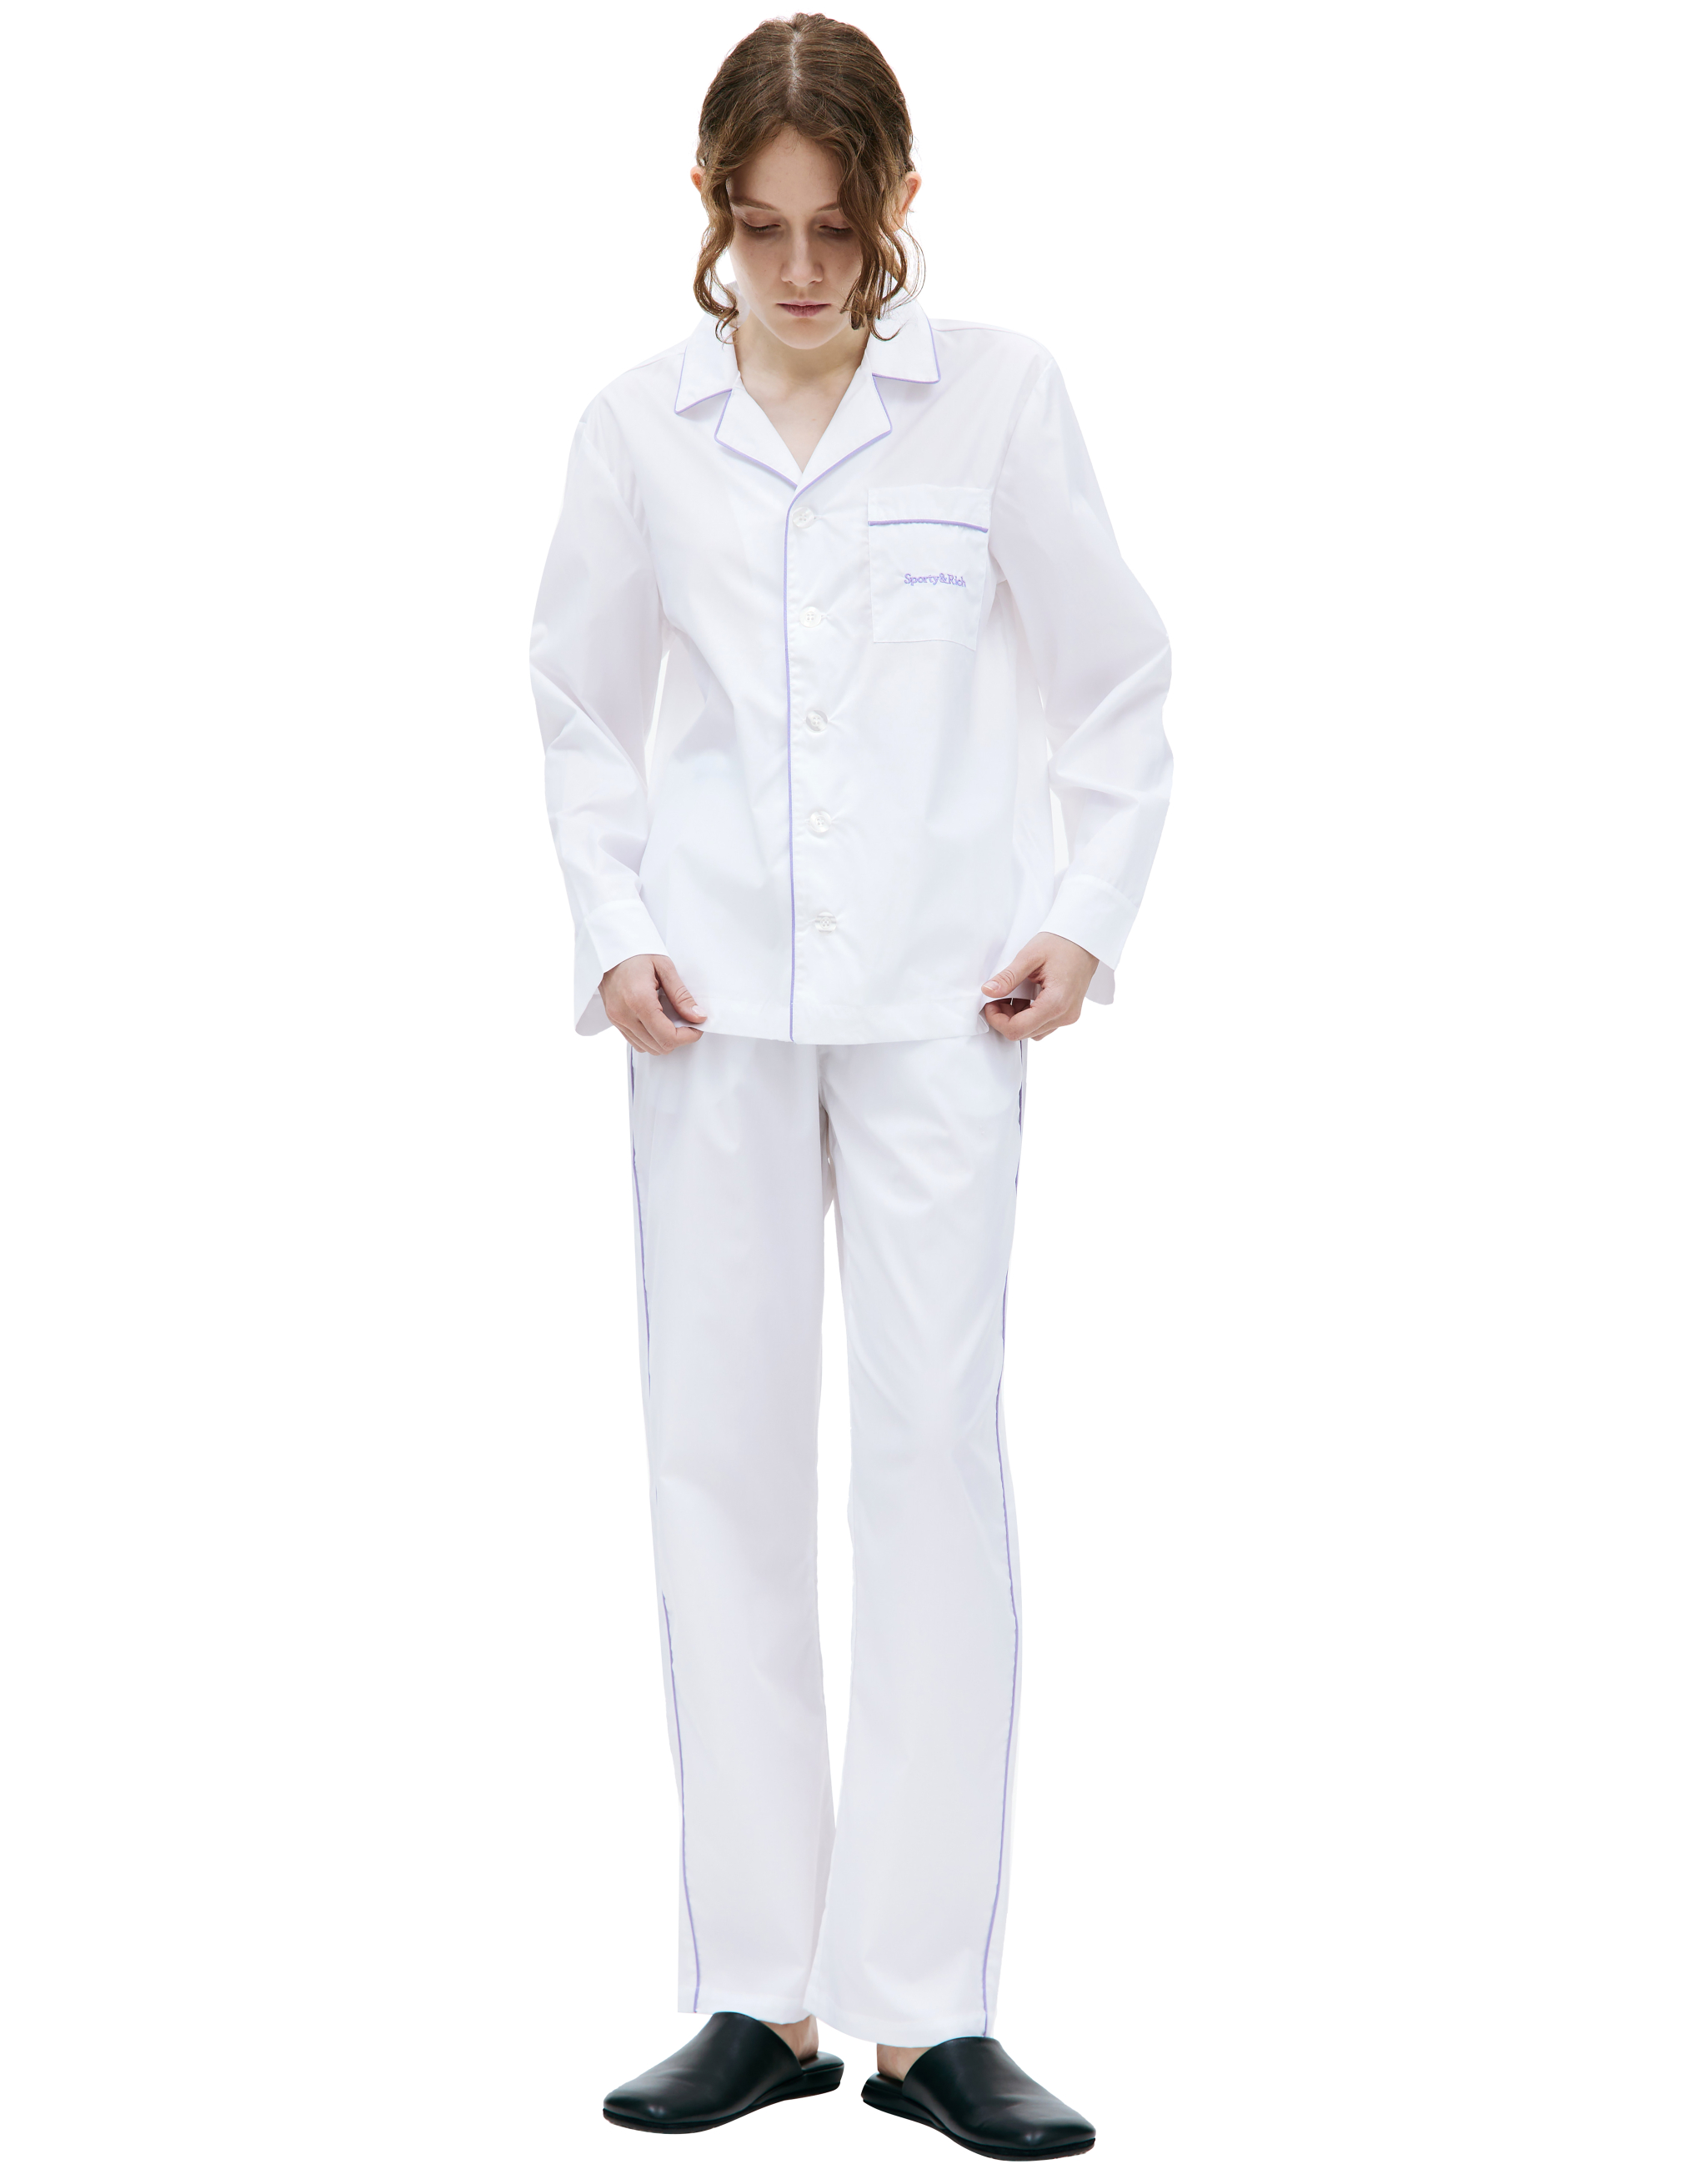 Пижамная рубашка Serif SPORTY & RICH PJ1015WH, размер S;M;L;XL